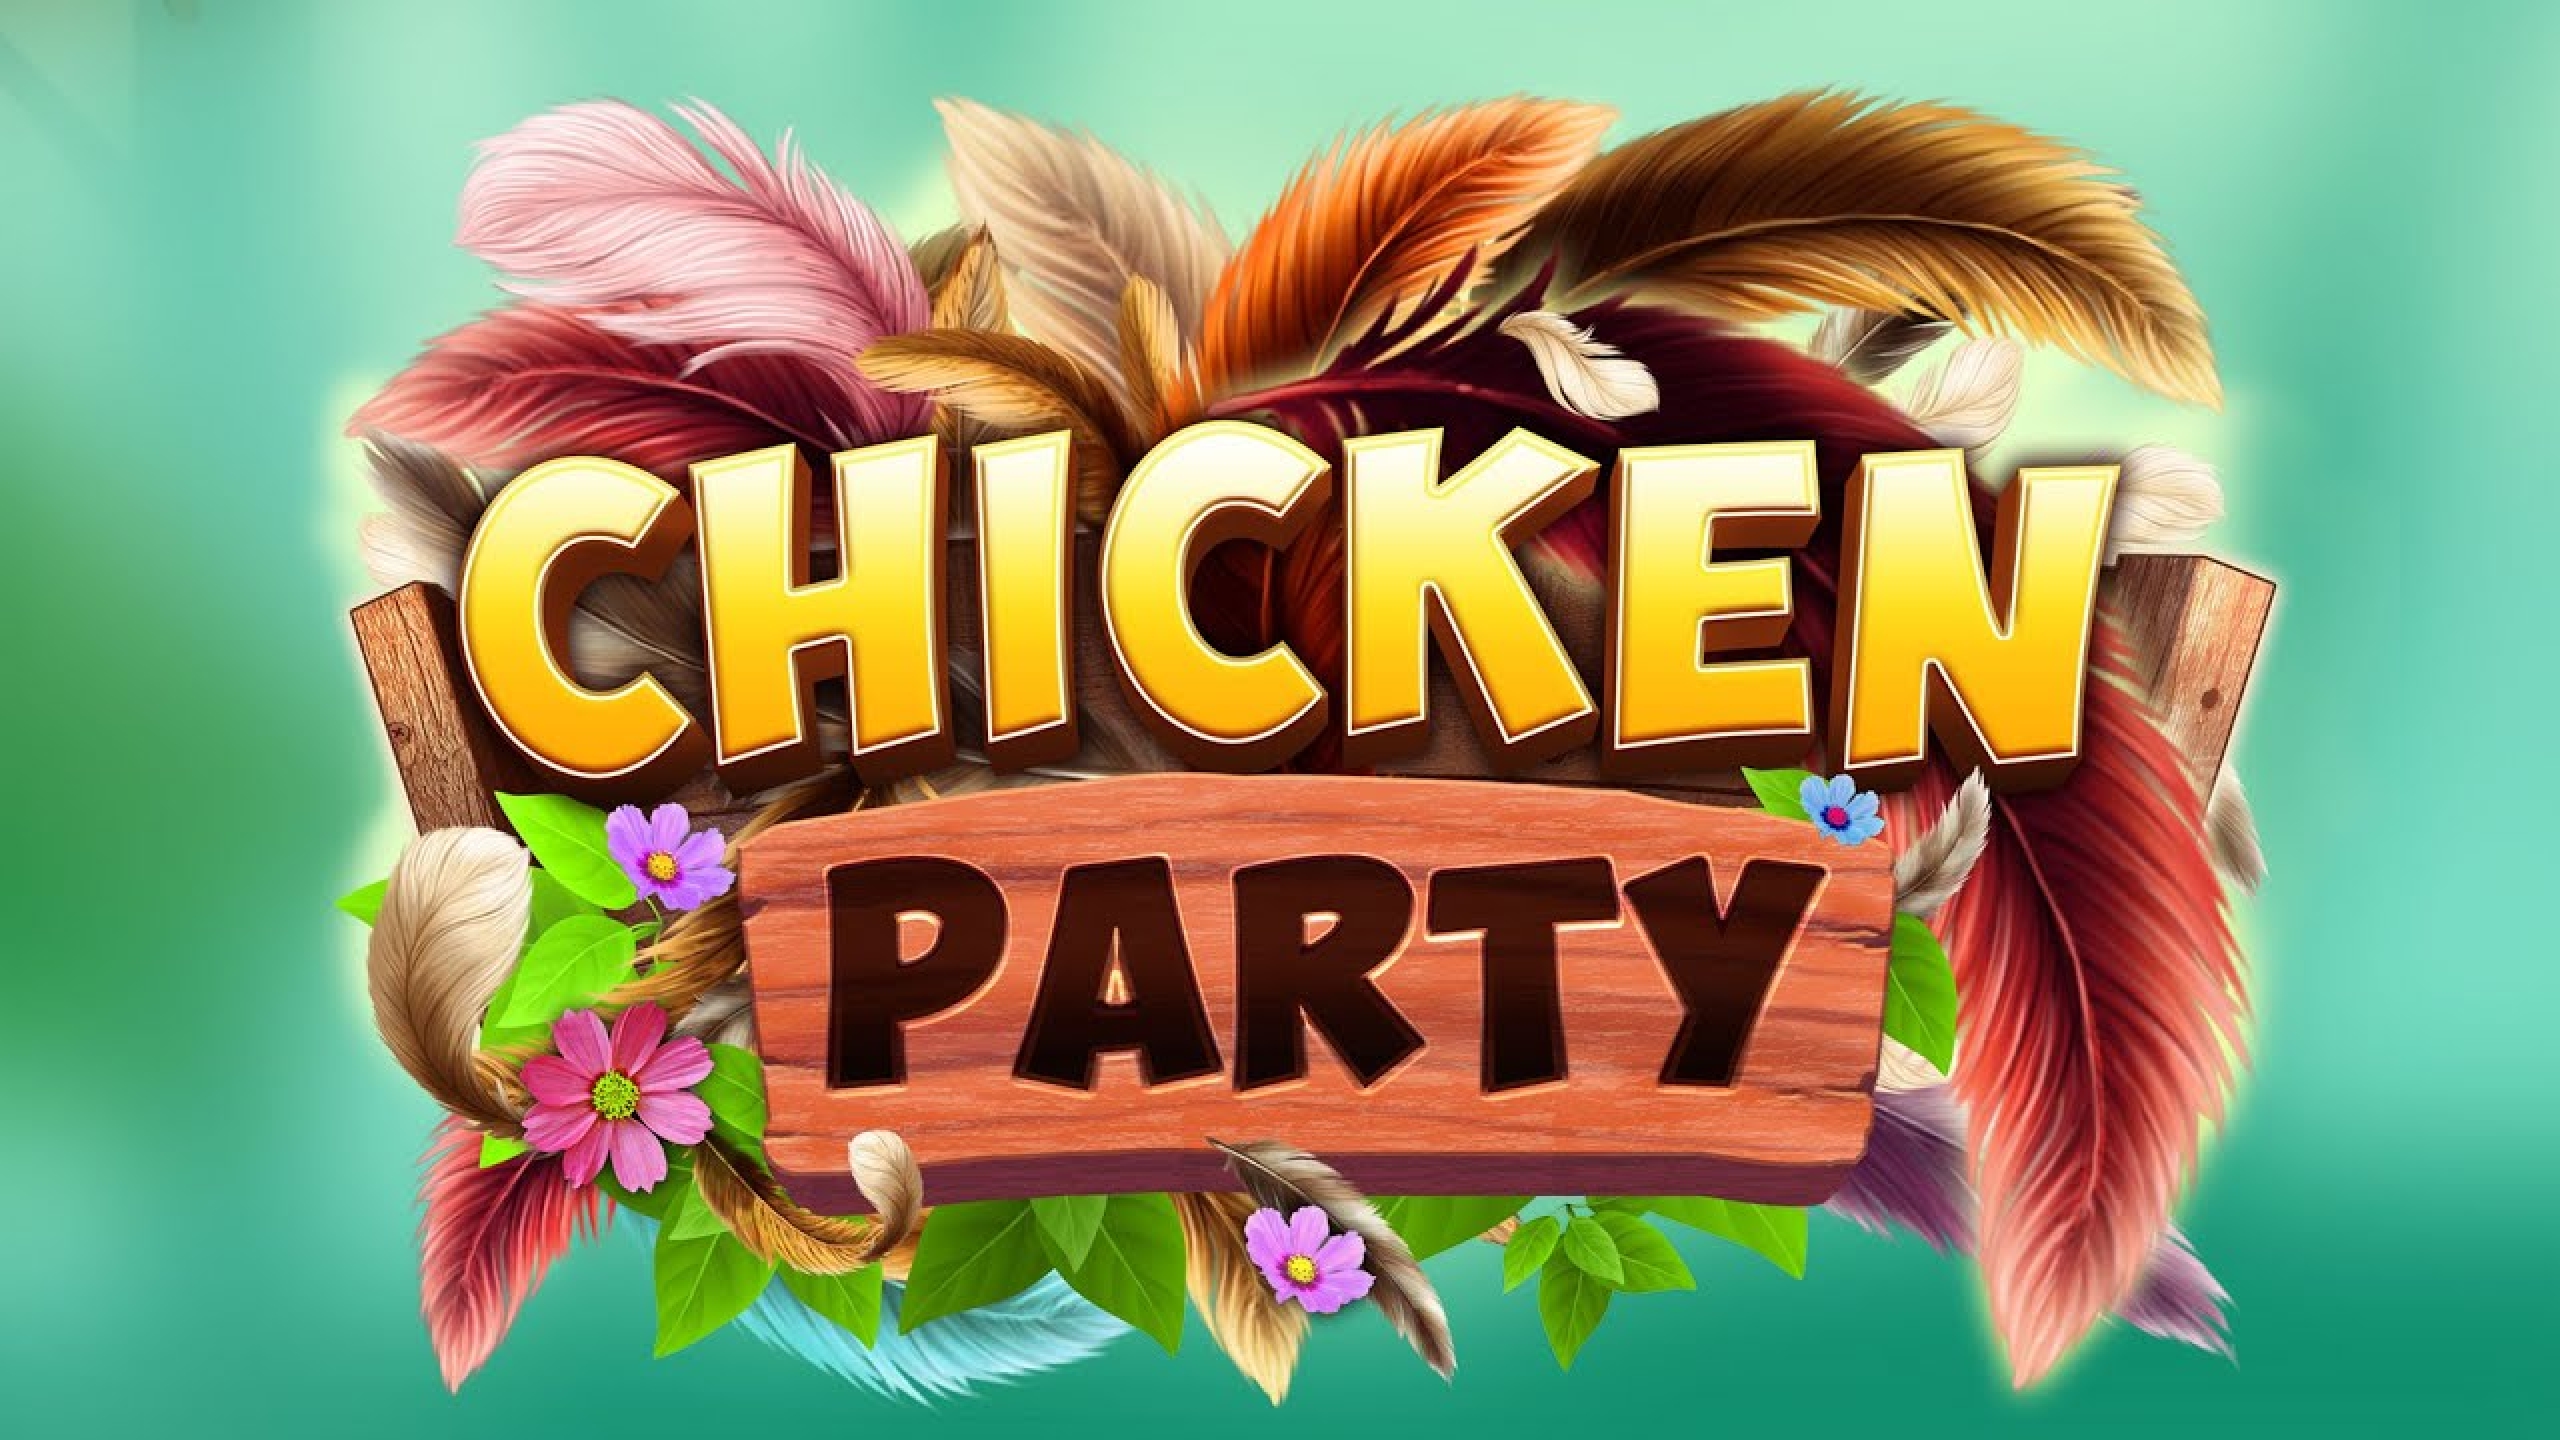 Chicken Party demo